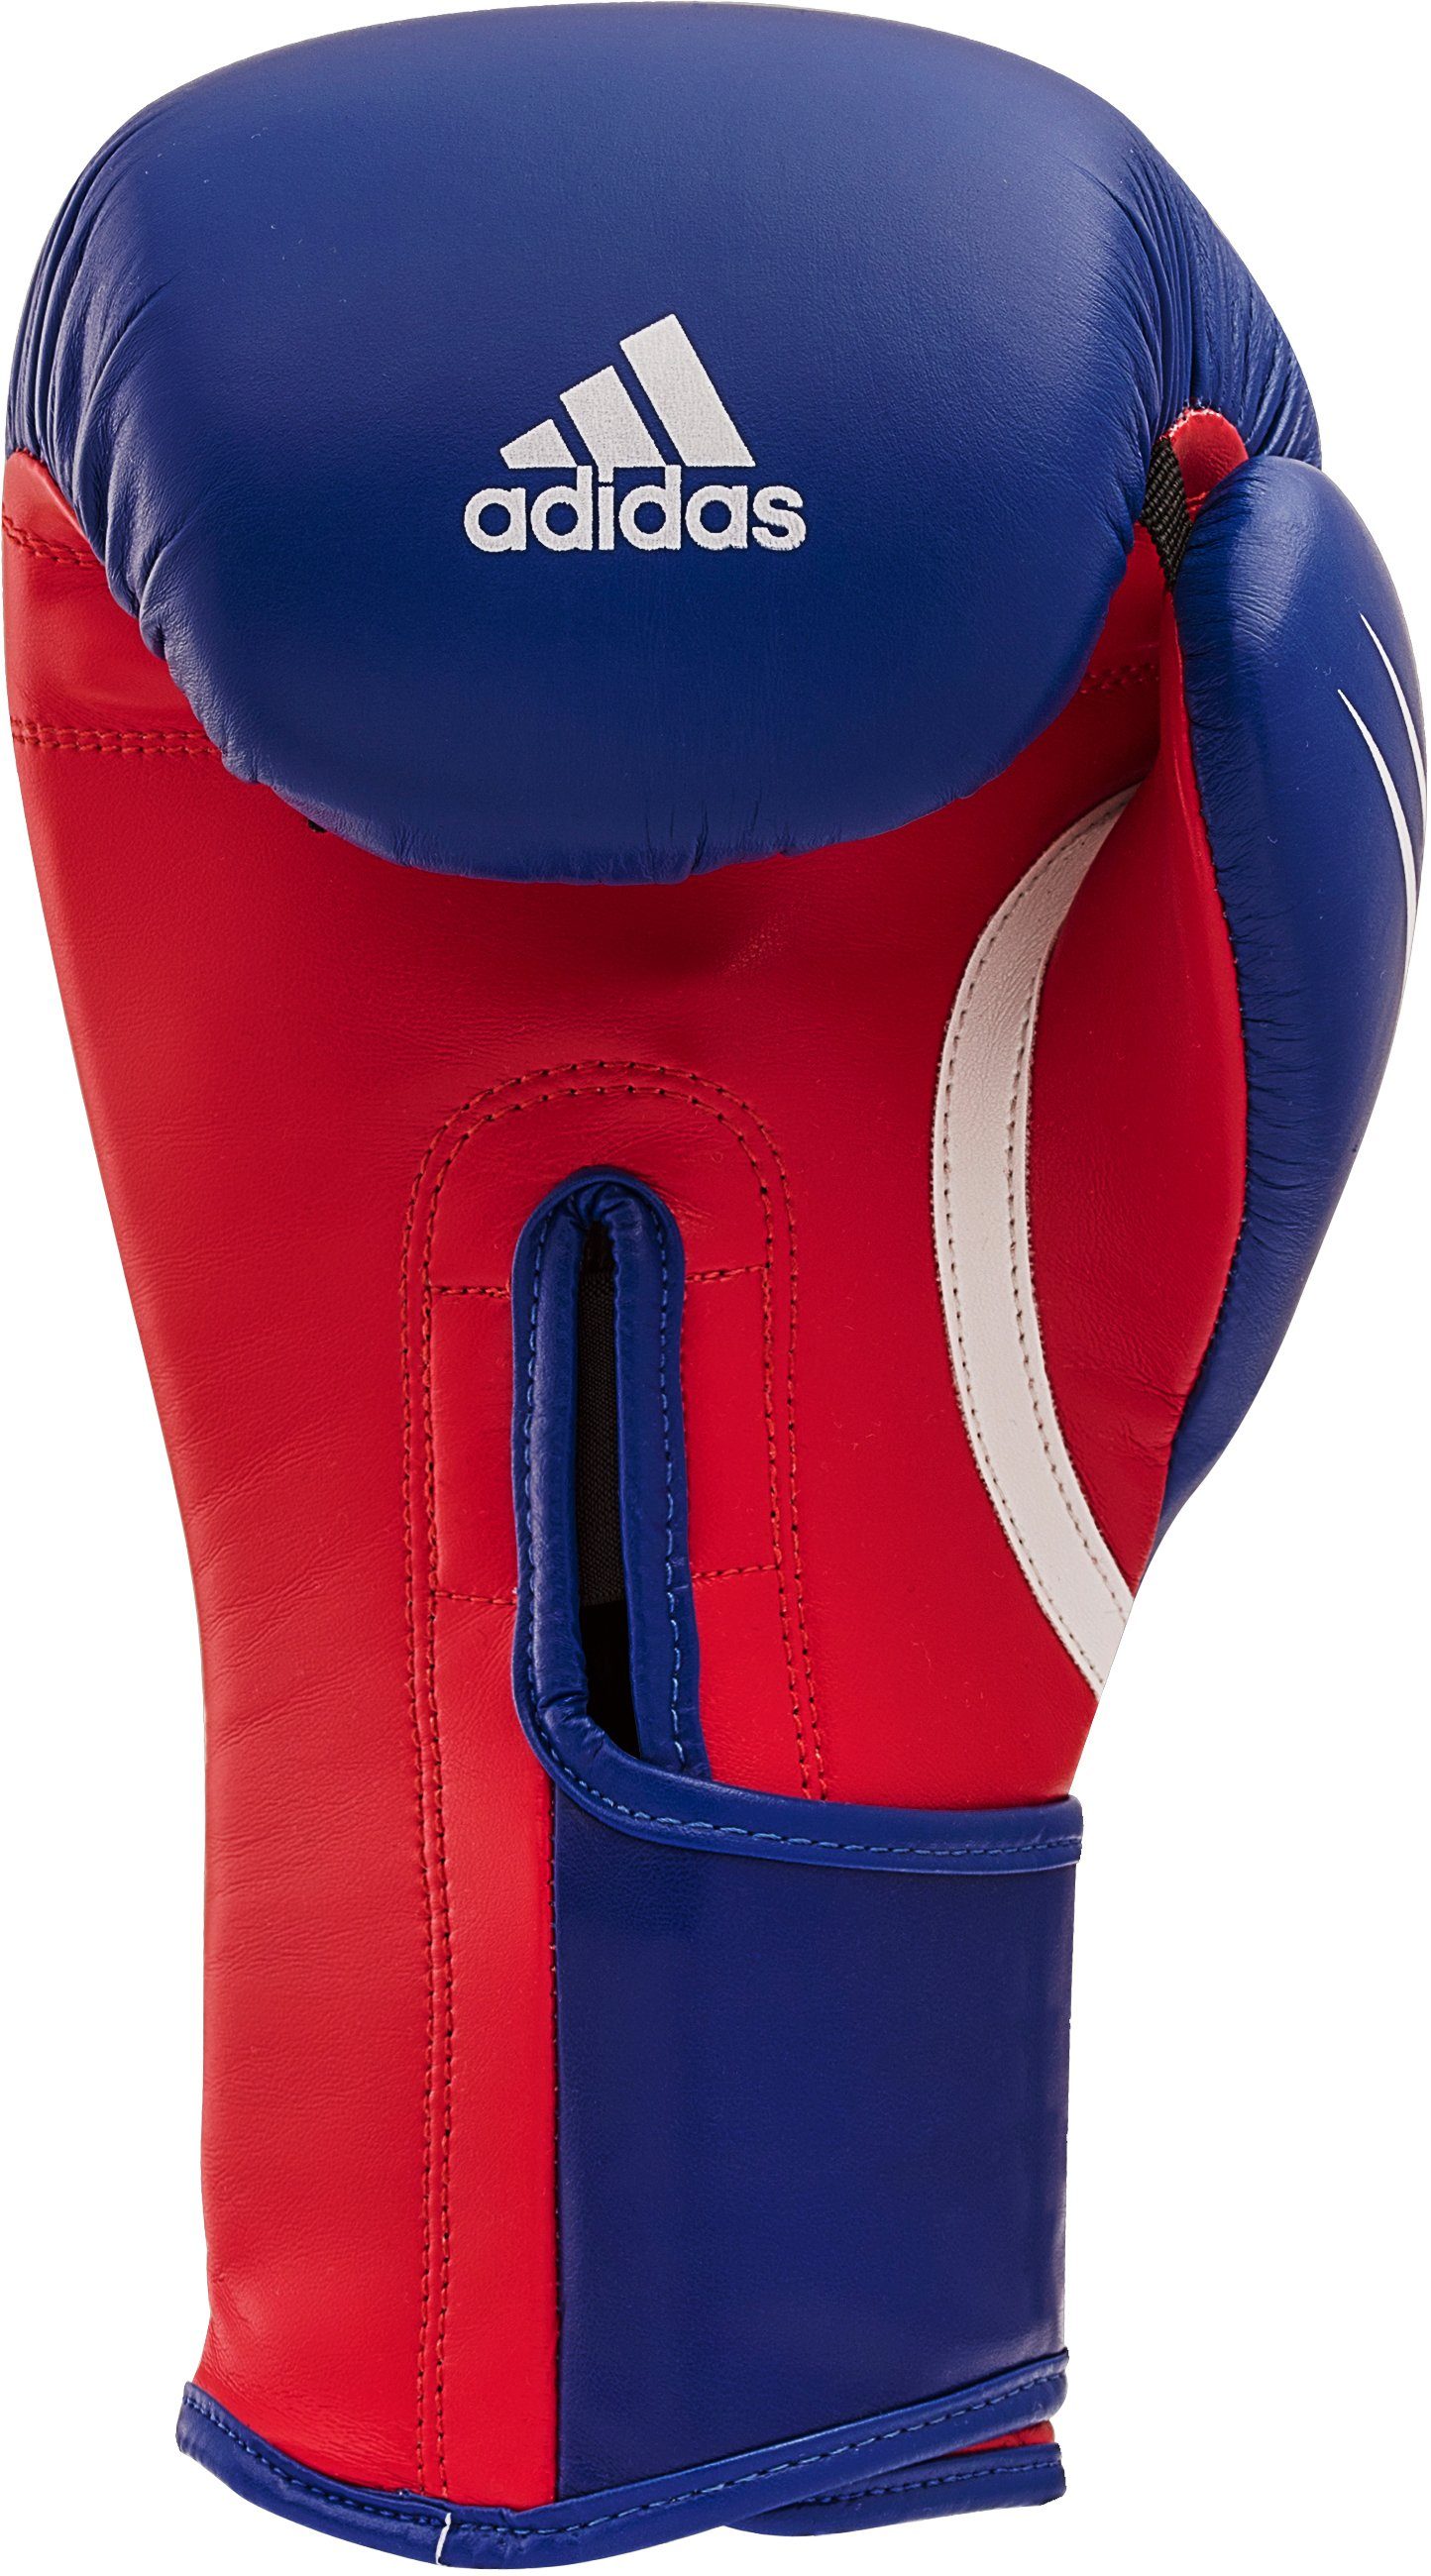 adidas Boxhandschuhe blau/rot Performance